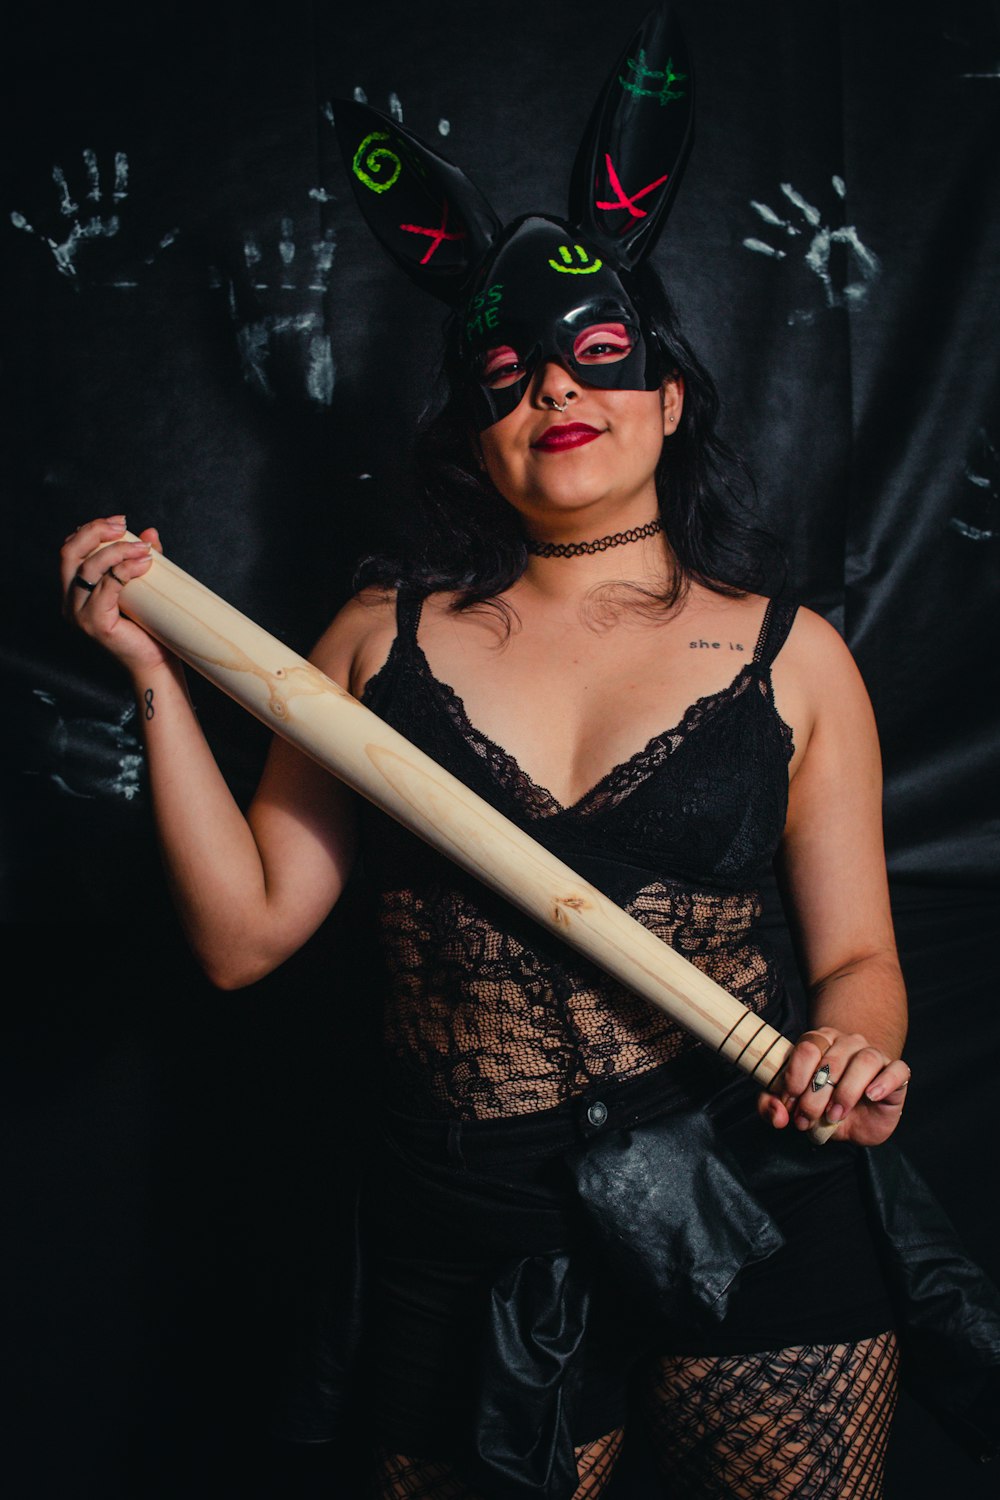 a woman in lingerie holding a baseball bat